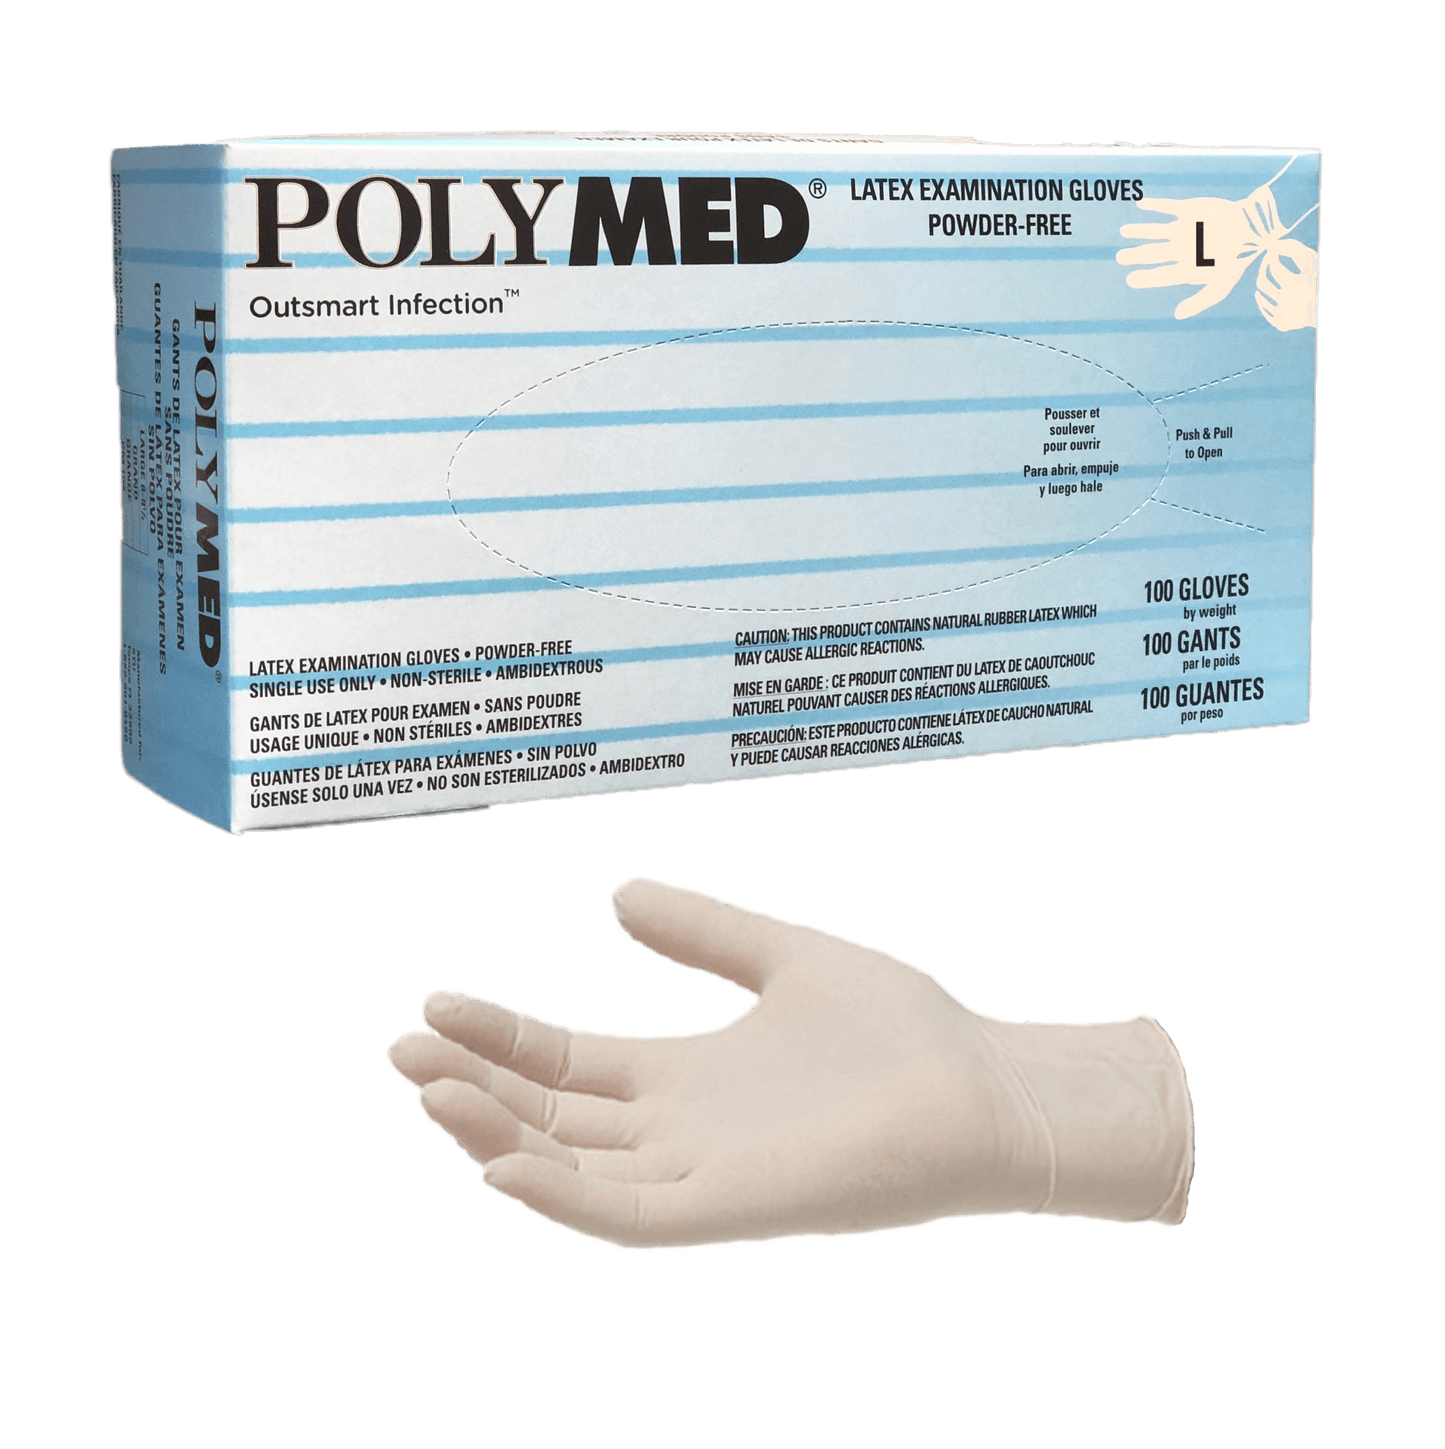 Polymed powder free latex exam gloves